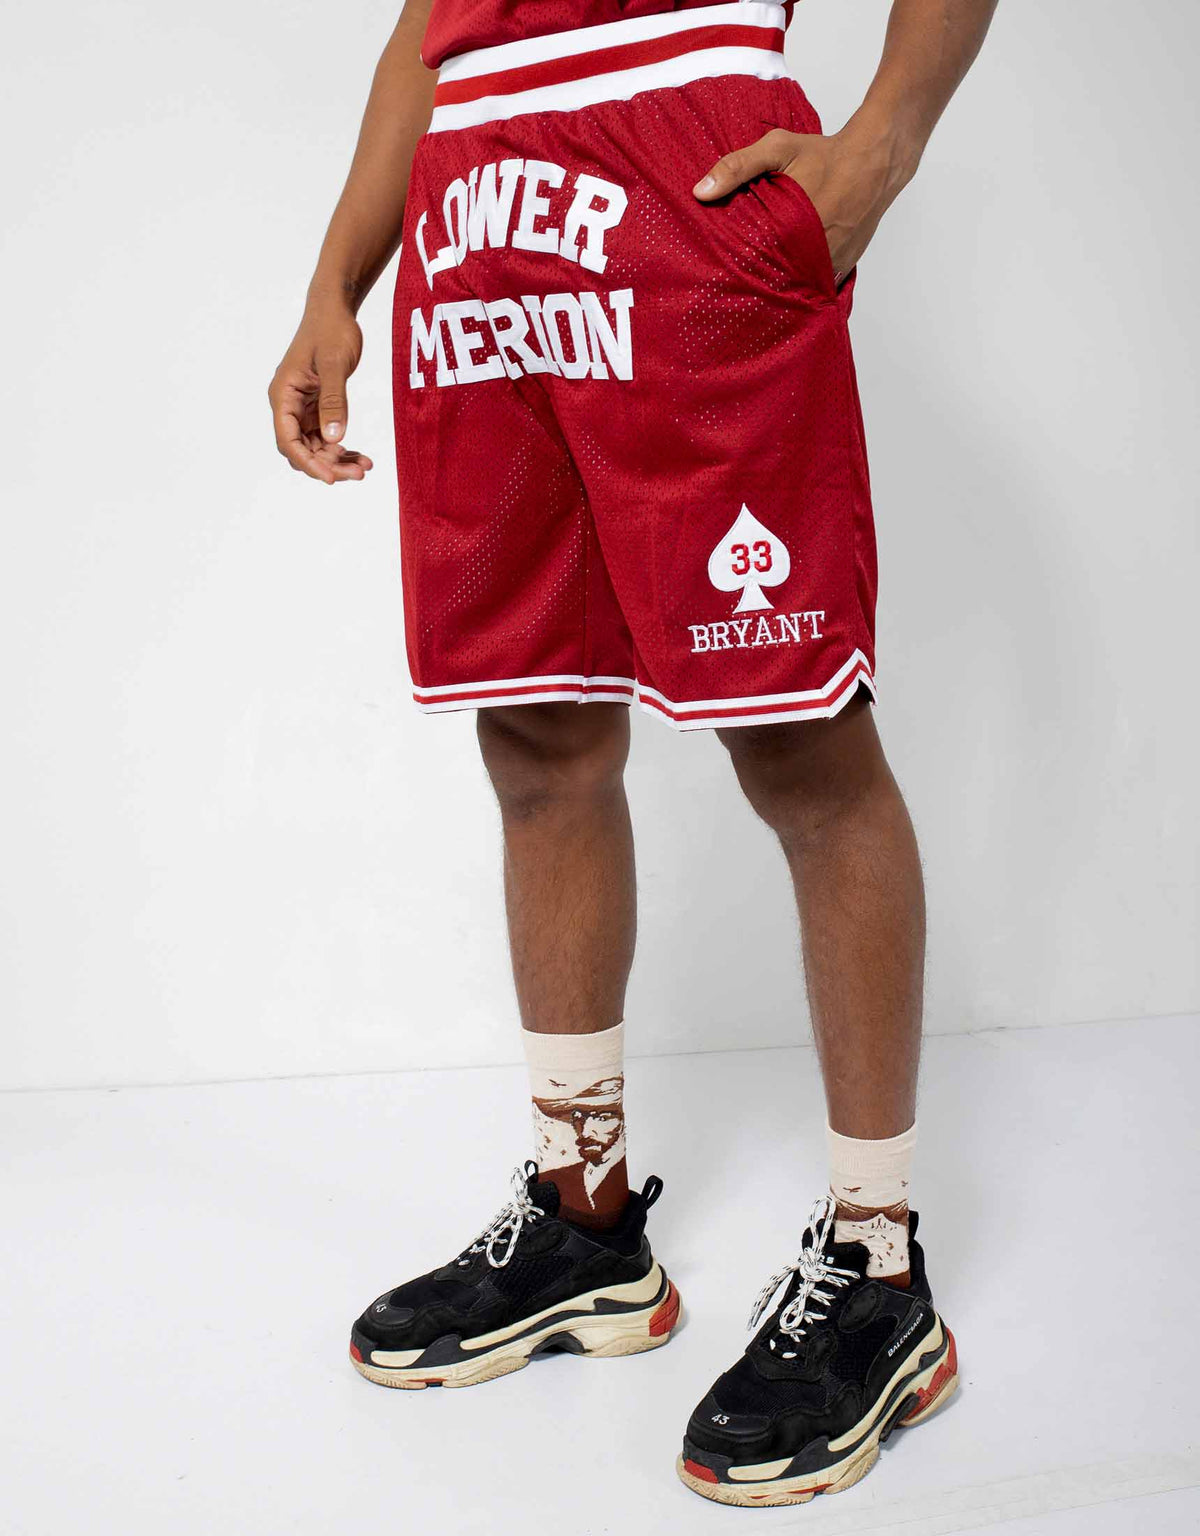 Kobe Bryant Shorts #33 Lower Merion High School Basketball Red Shorts